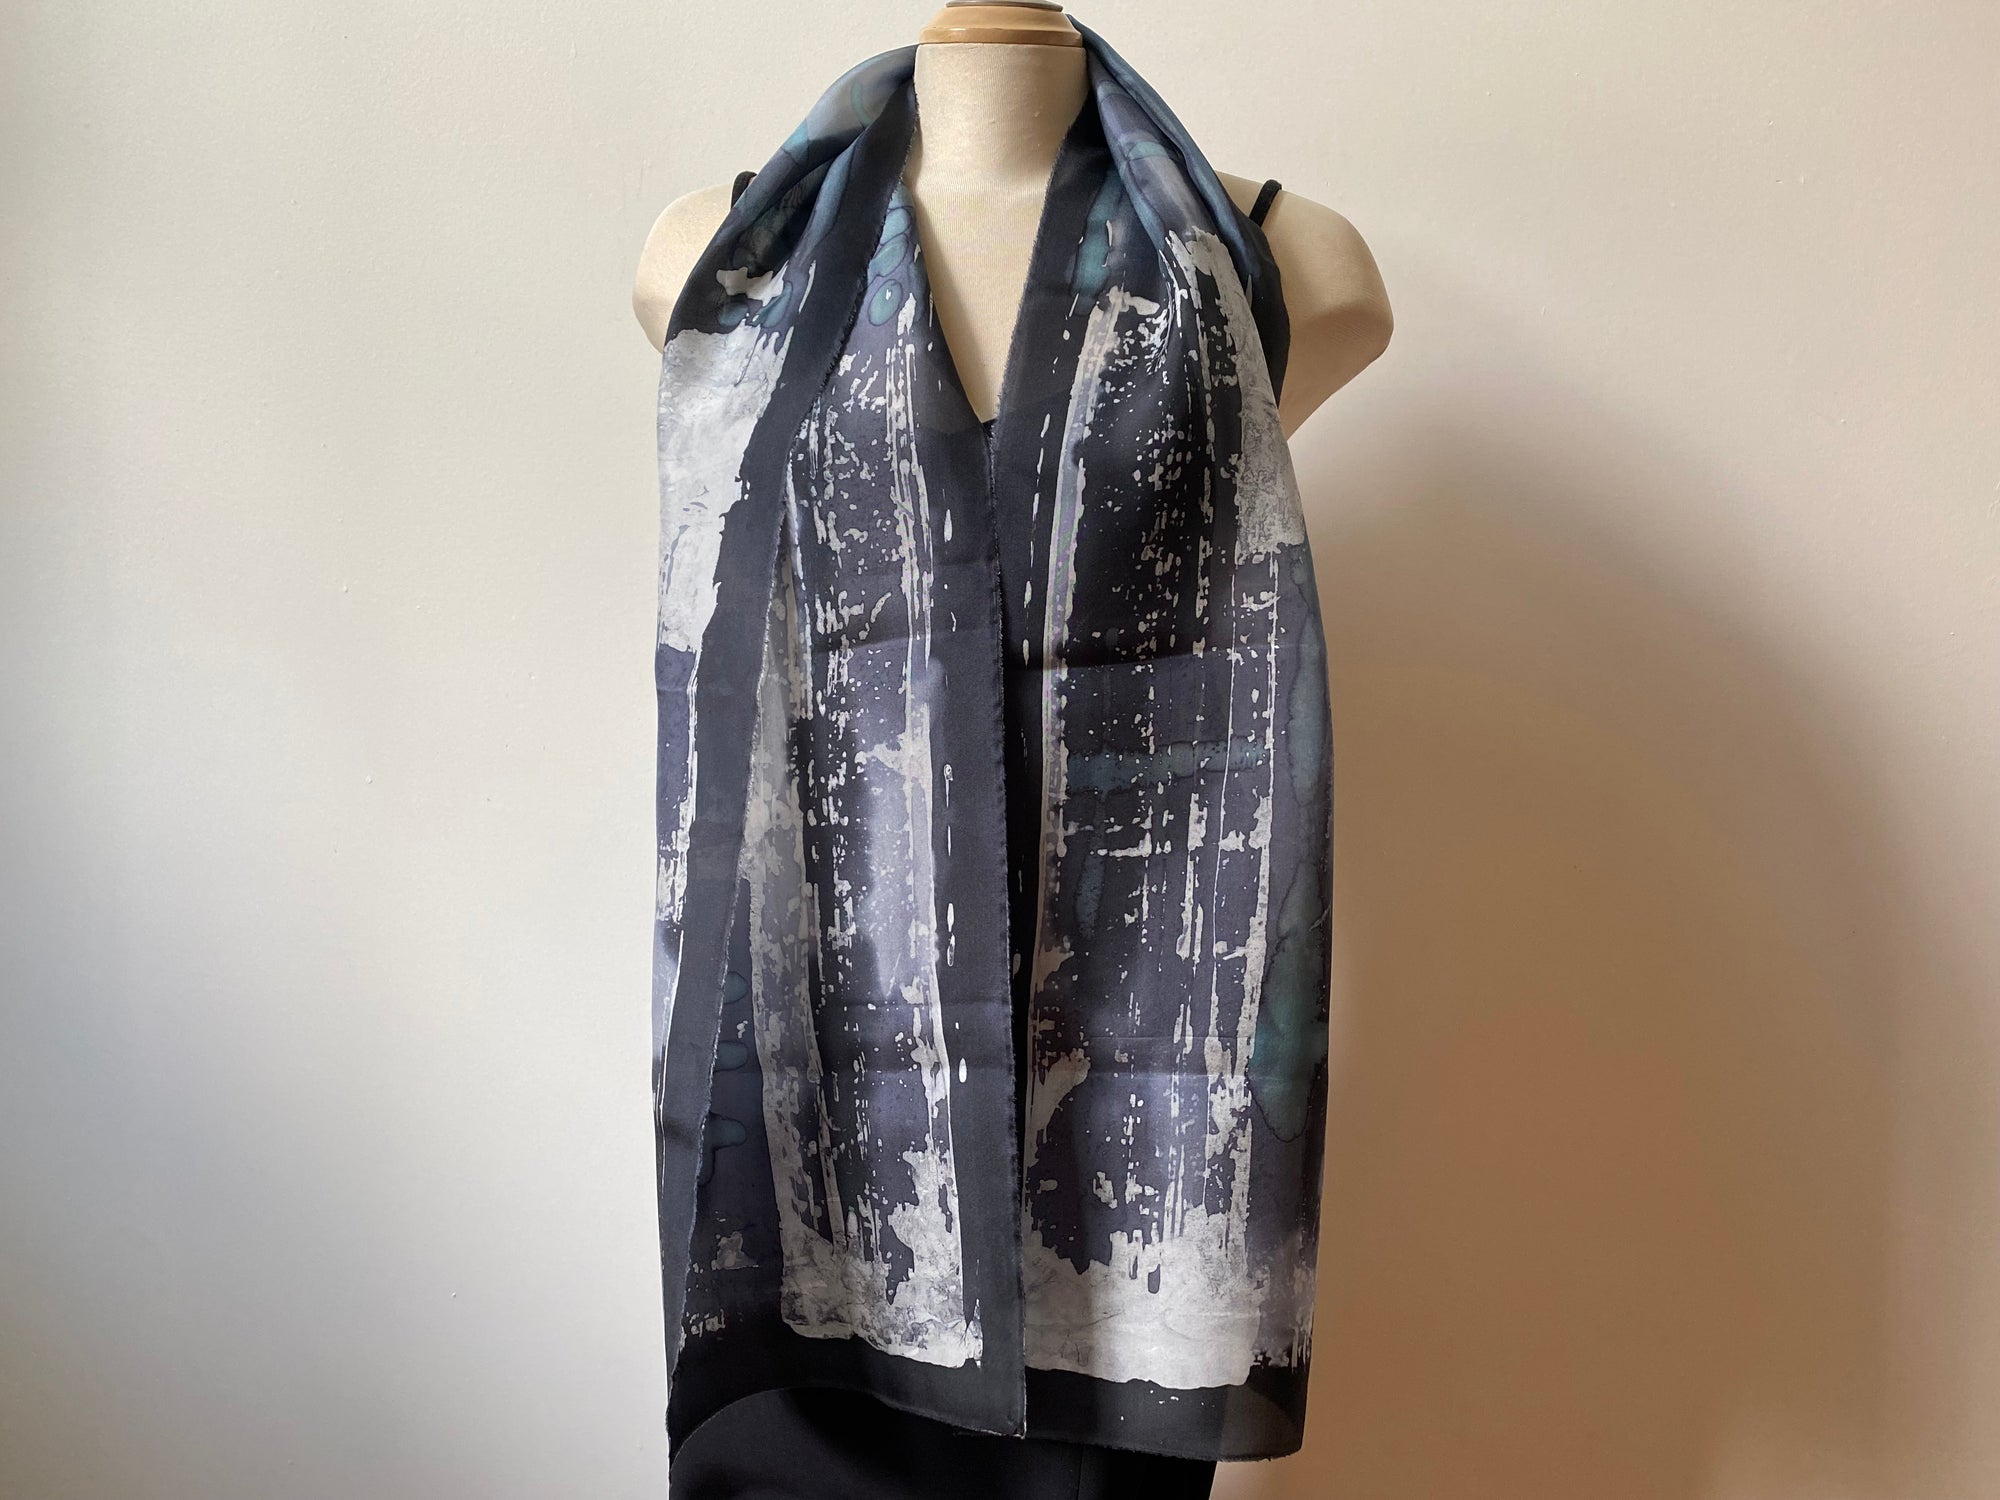 Batik Silk Scarf 11" x 70" - grey & black